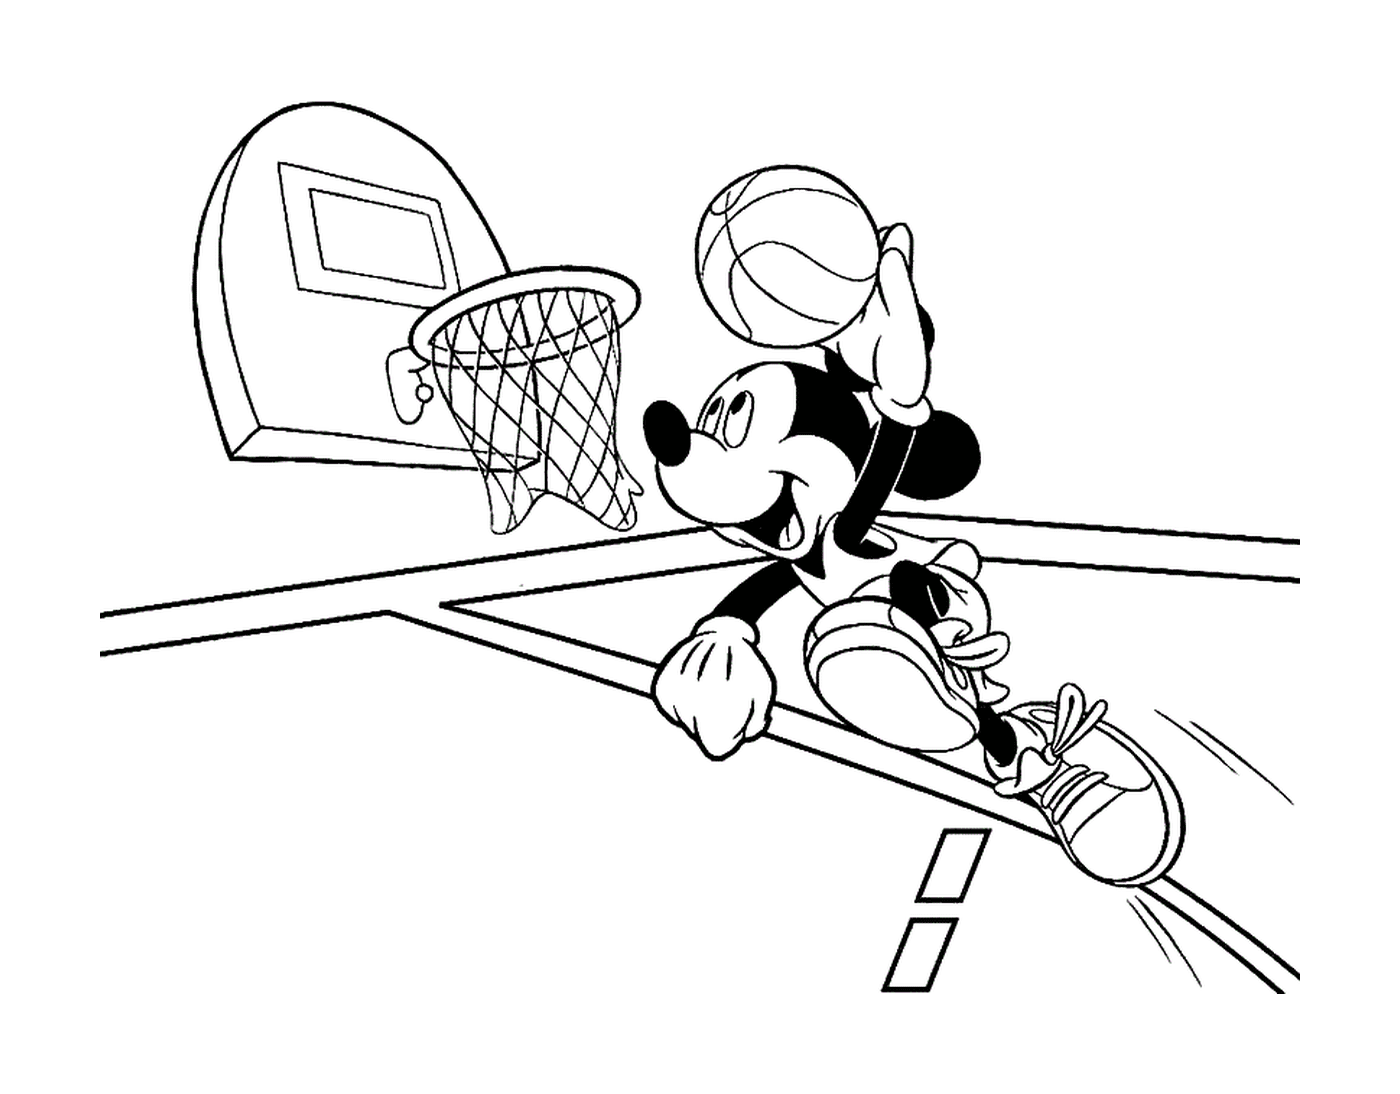  Mickey plays basketball with Boy 